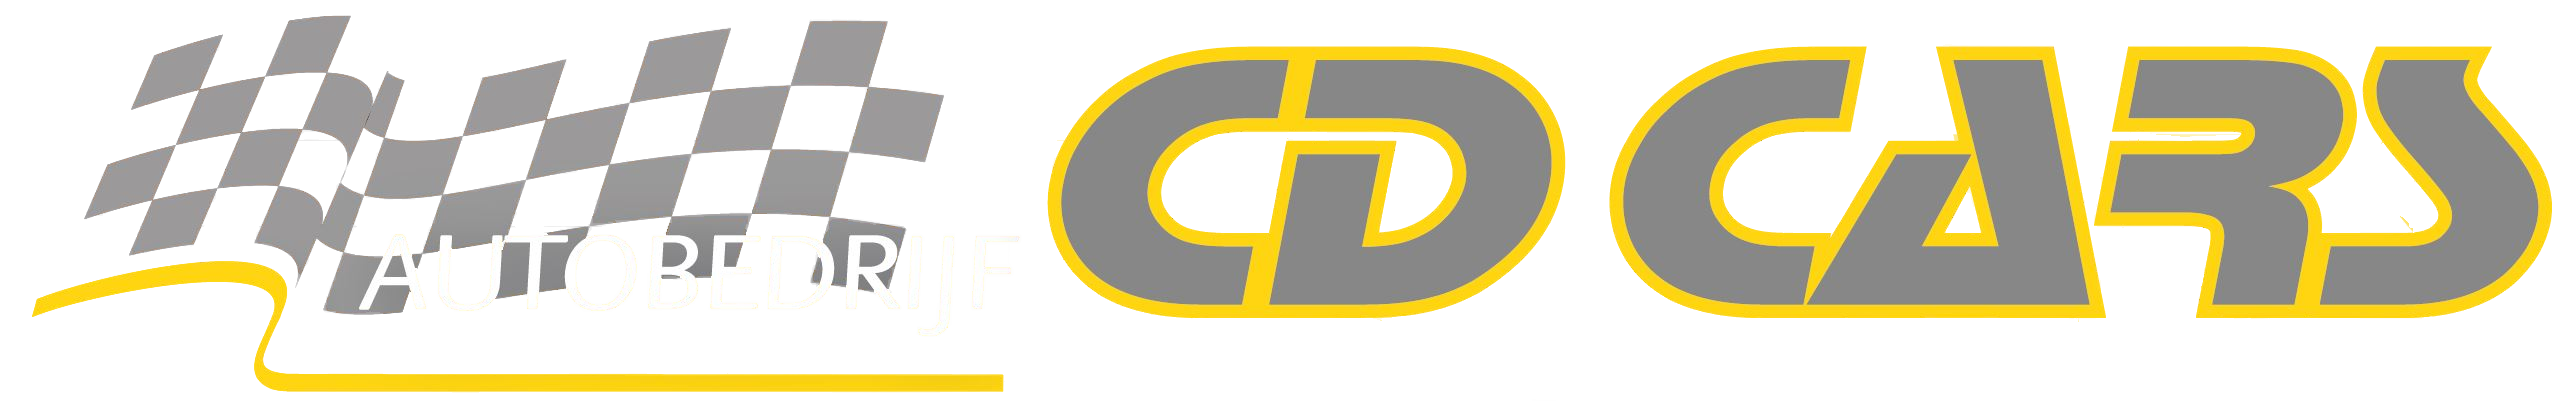 cdcars logo